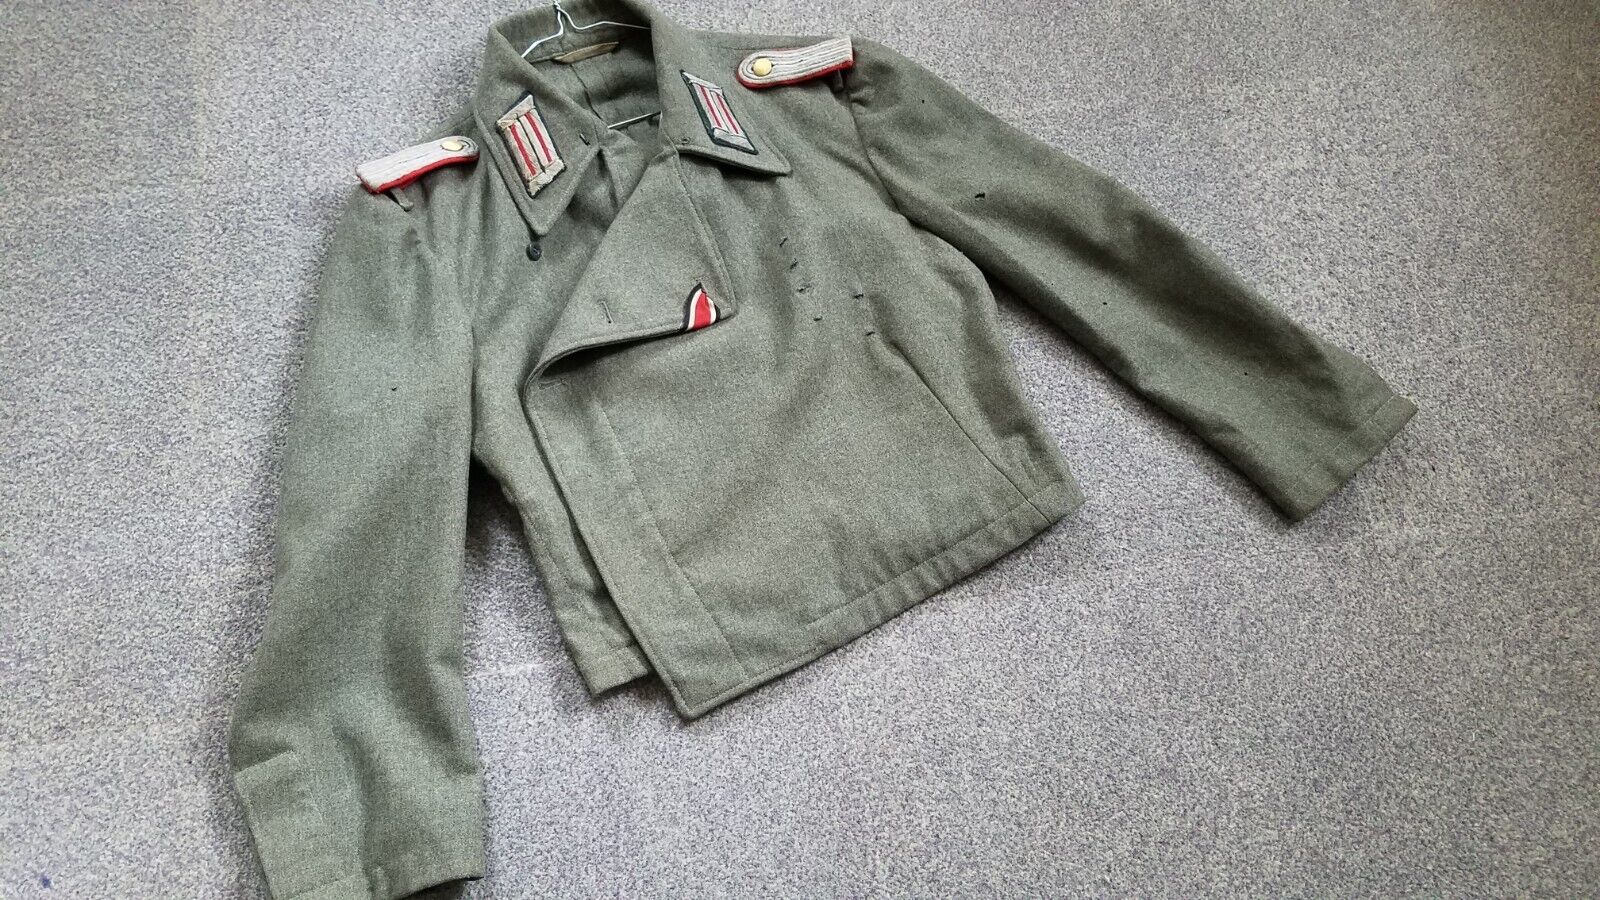 Ww2 German Uniform Original Fabric